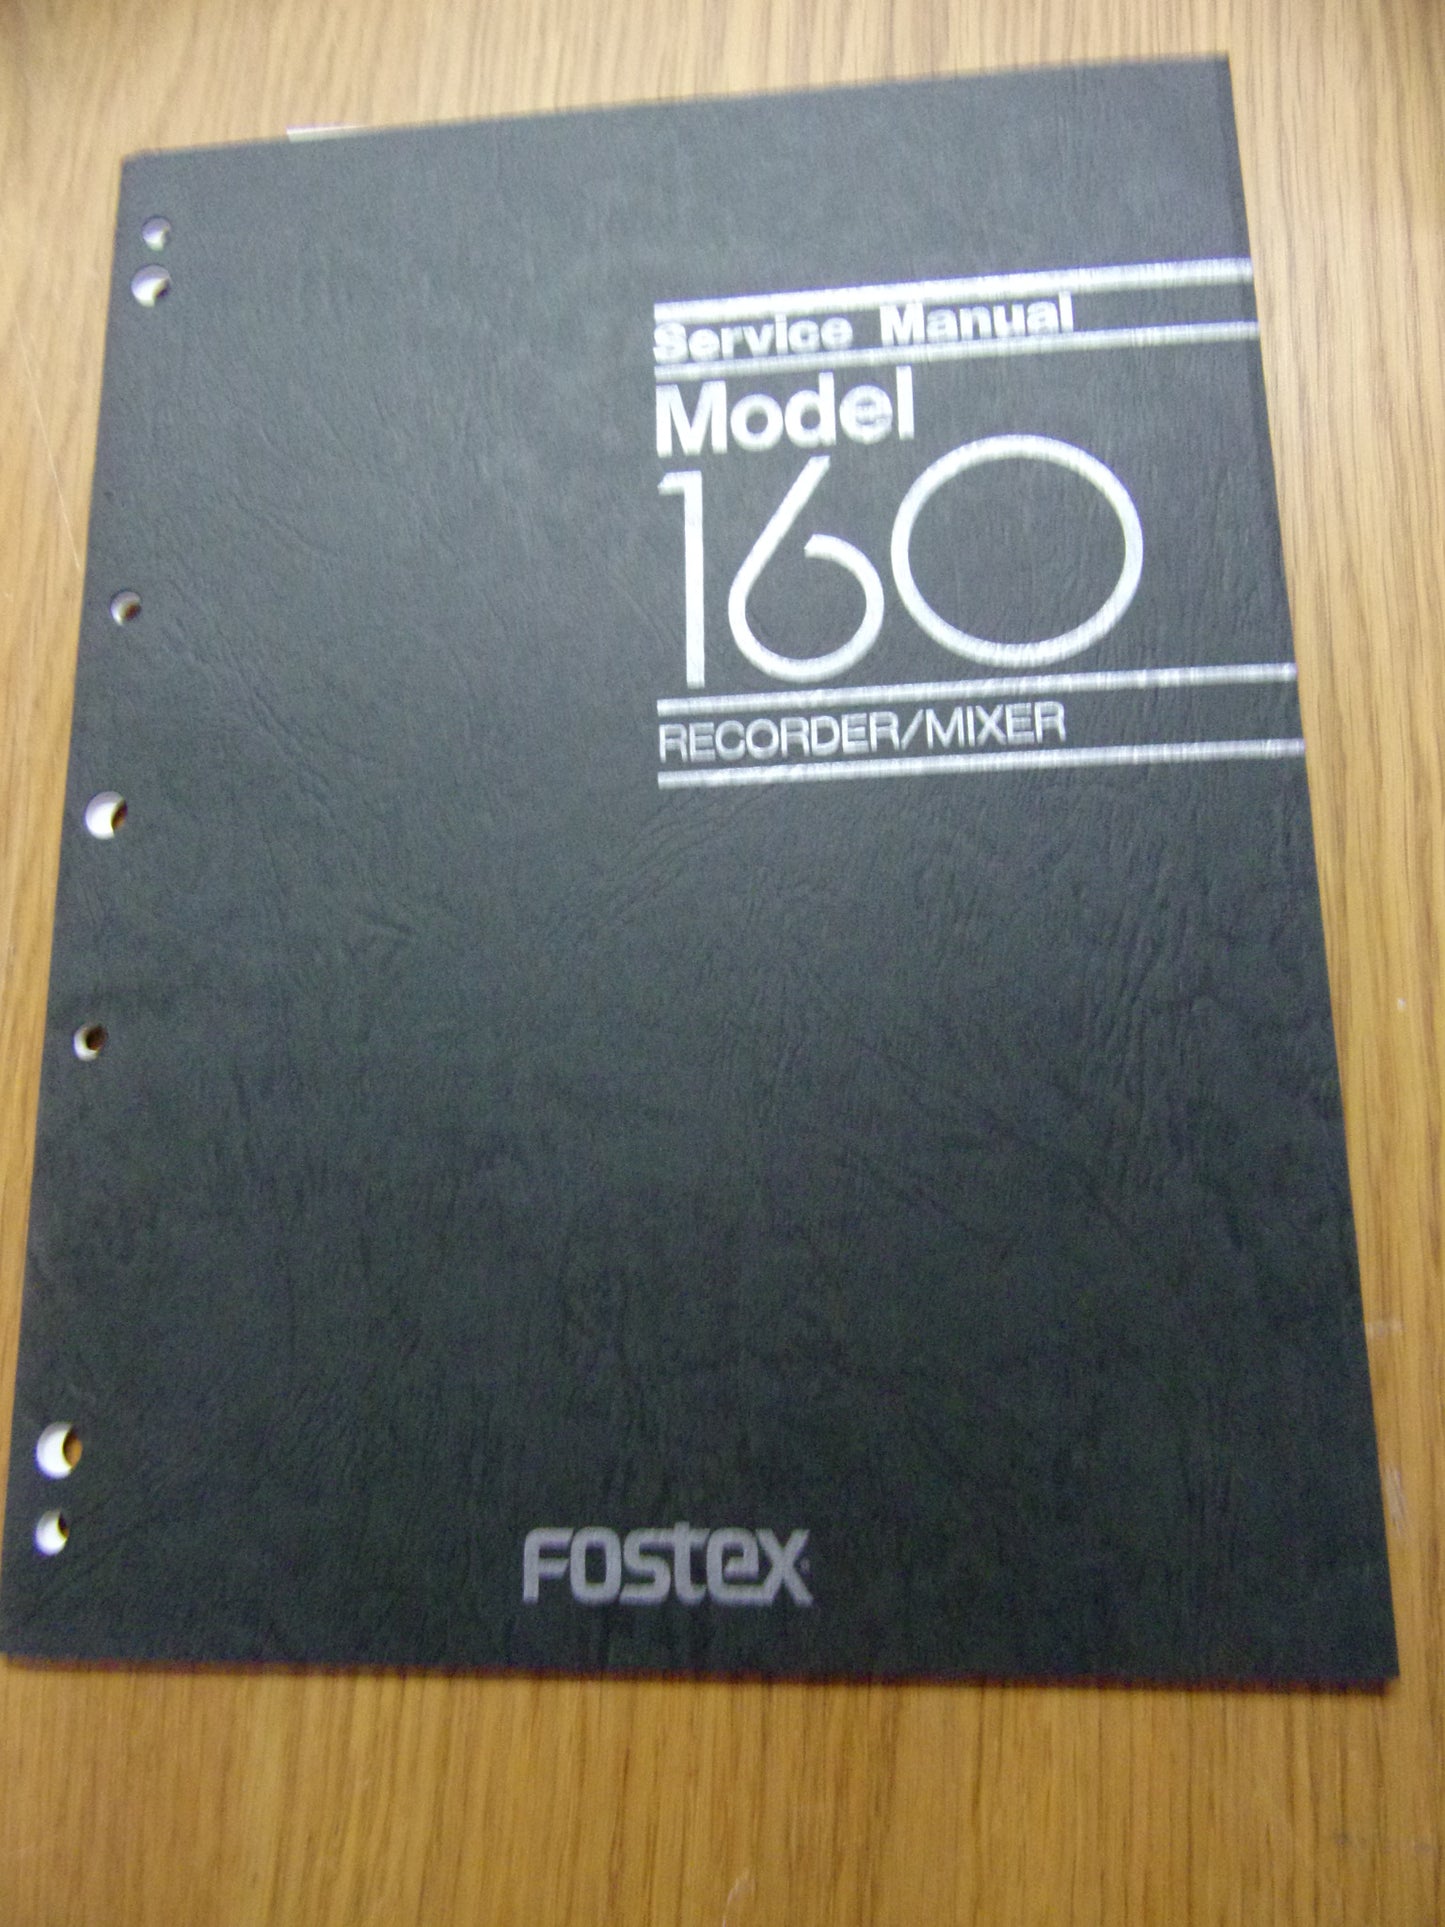 FOSTEX MODEL 160 SERVICE MANUAL